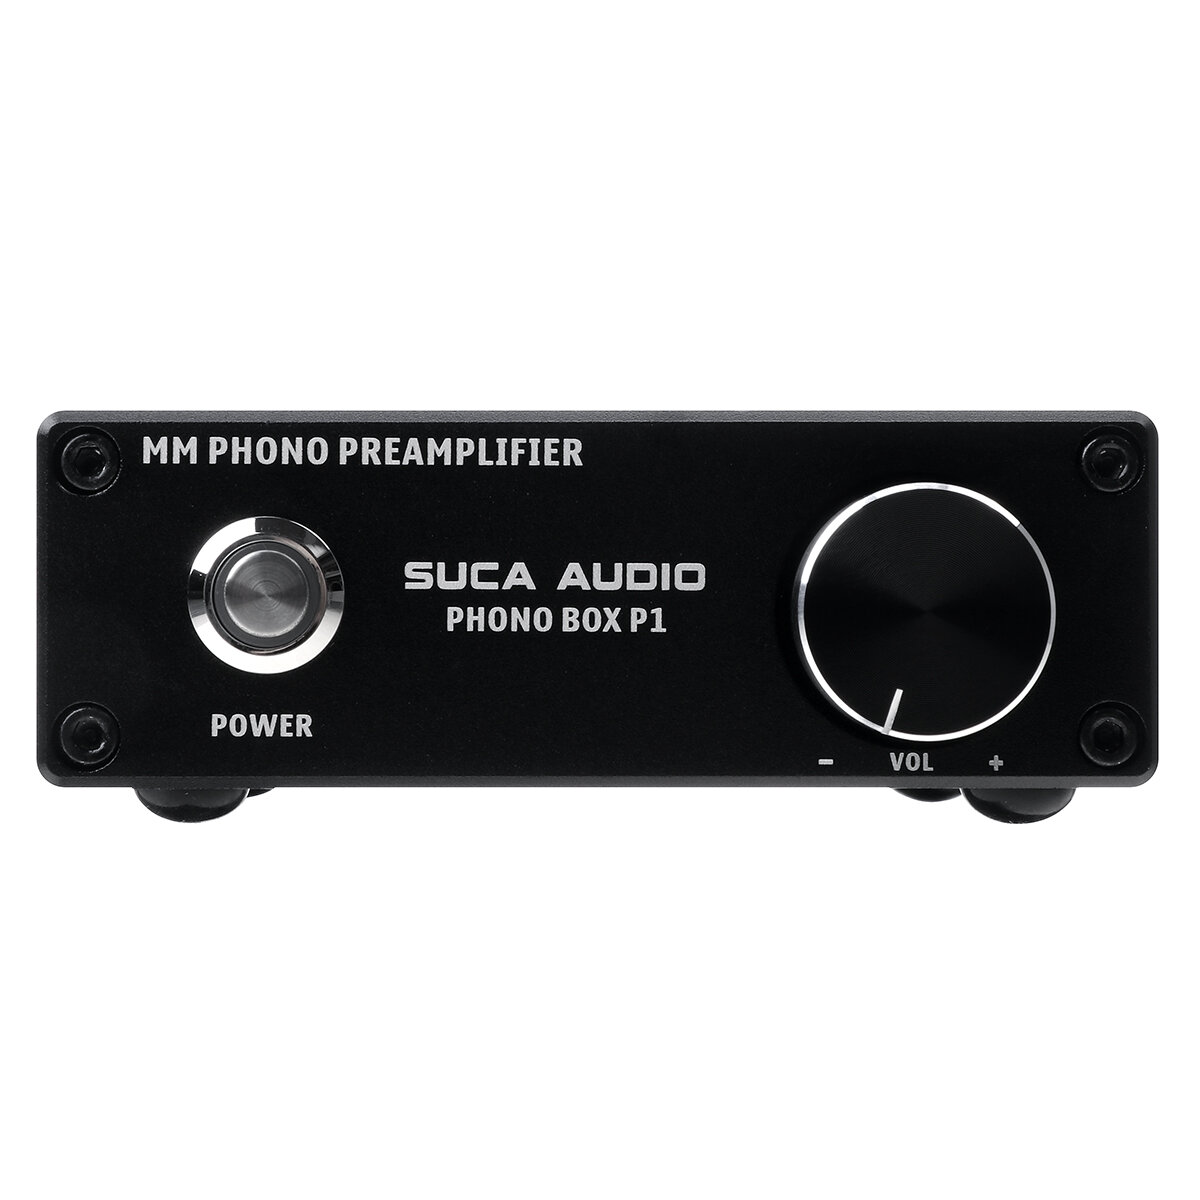 

SUCA AUDIO PHONO BOX P1 MM Record Player Audio HiFi Amplifier Stereo Turntable Phono Preamplifier